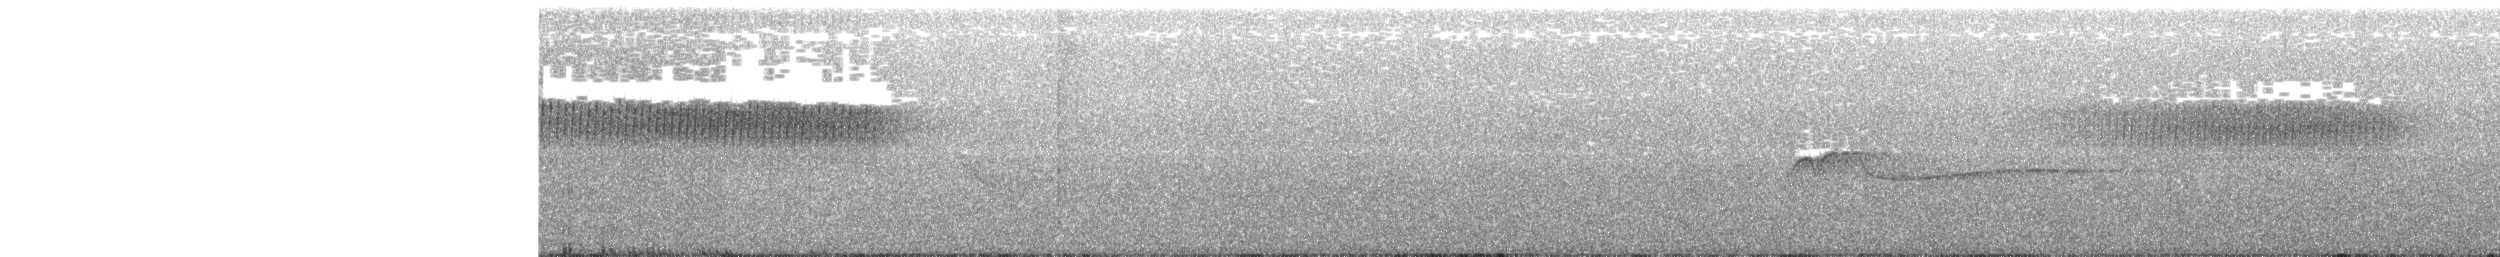 Paruline vermivore - ML162959741